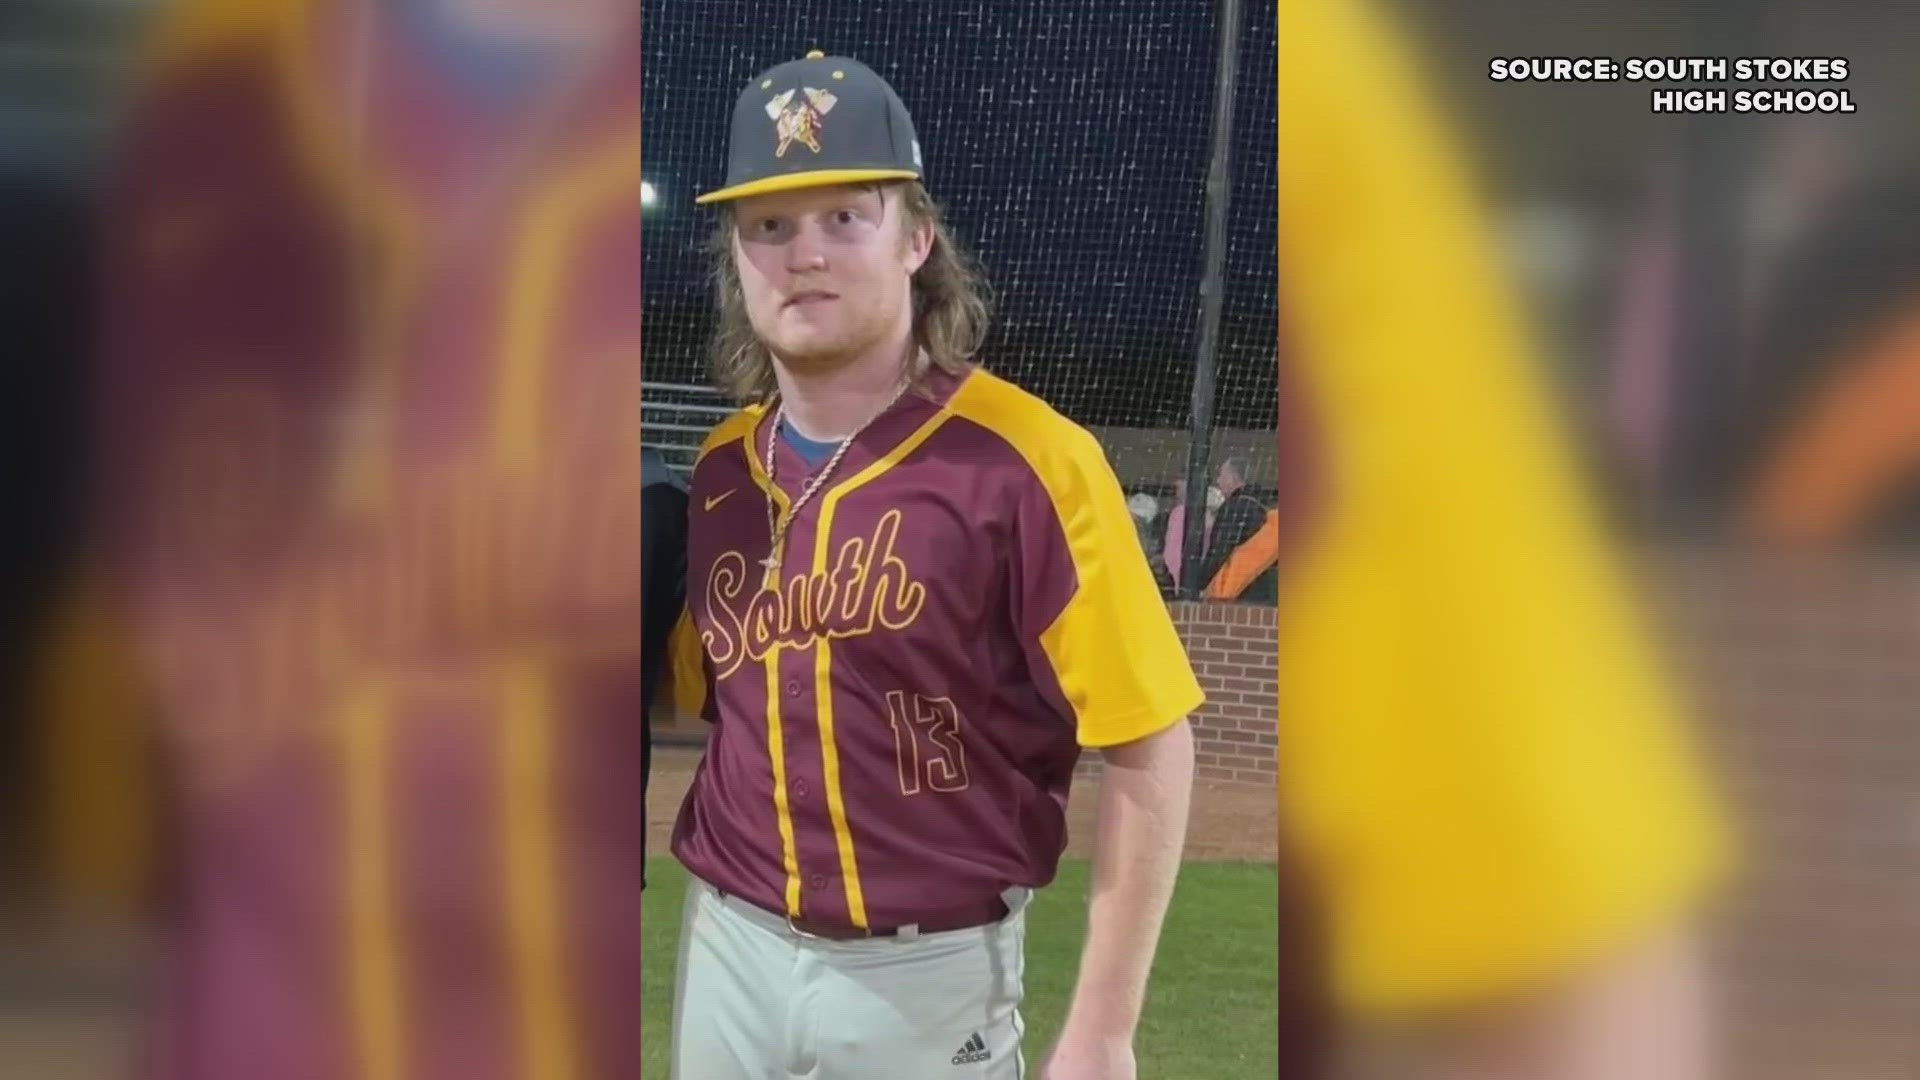 Blake Hughes played baseball for South Stokes High School. He died in a car crash near Walnut Cove.